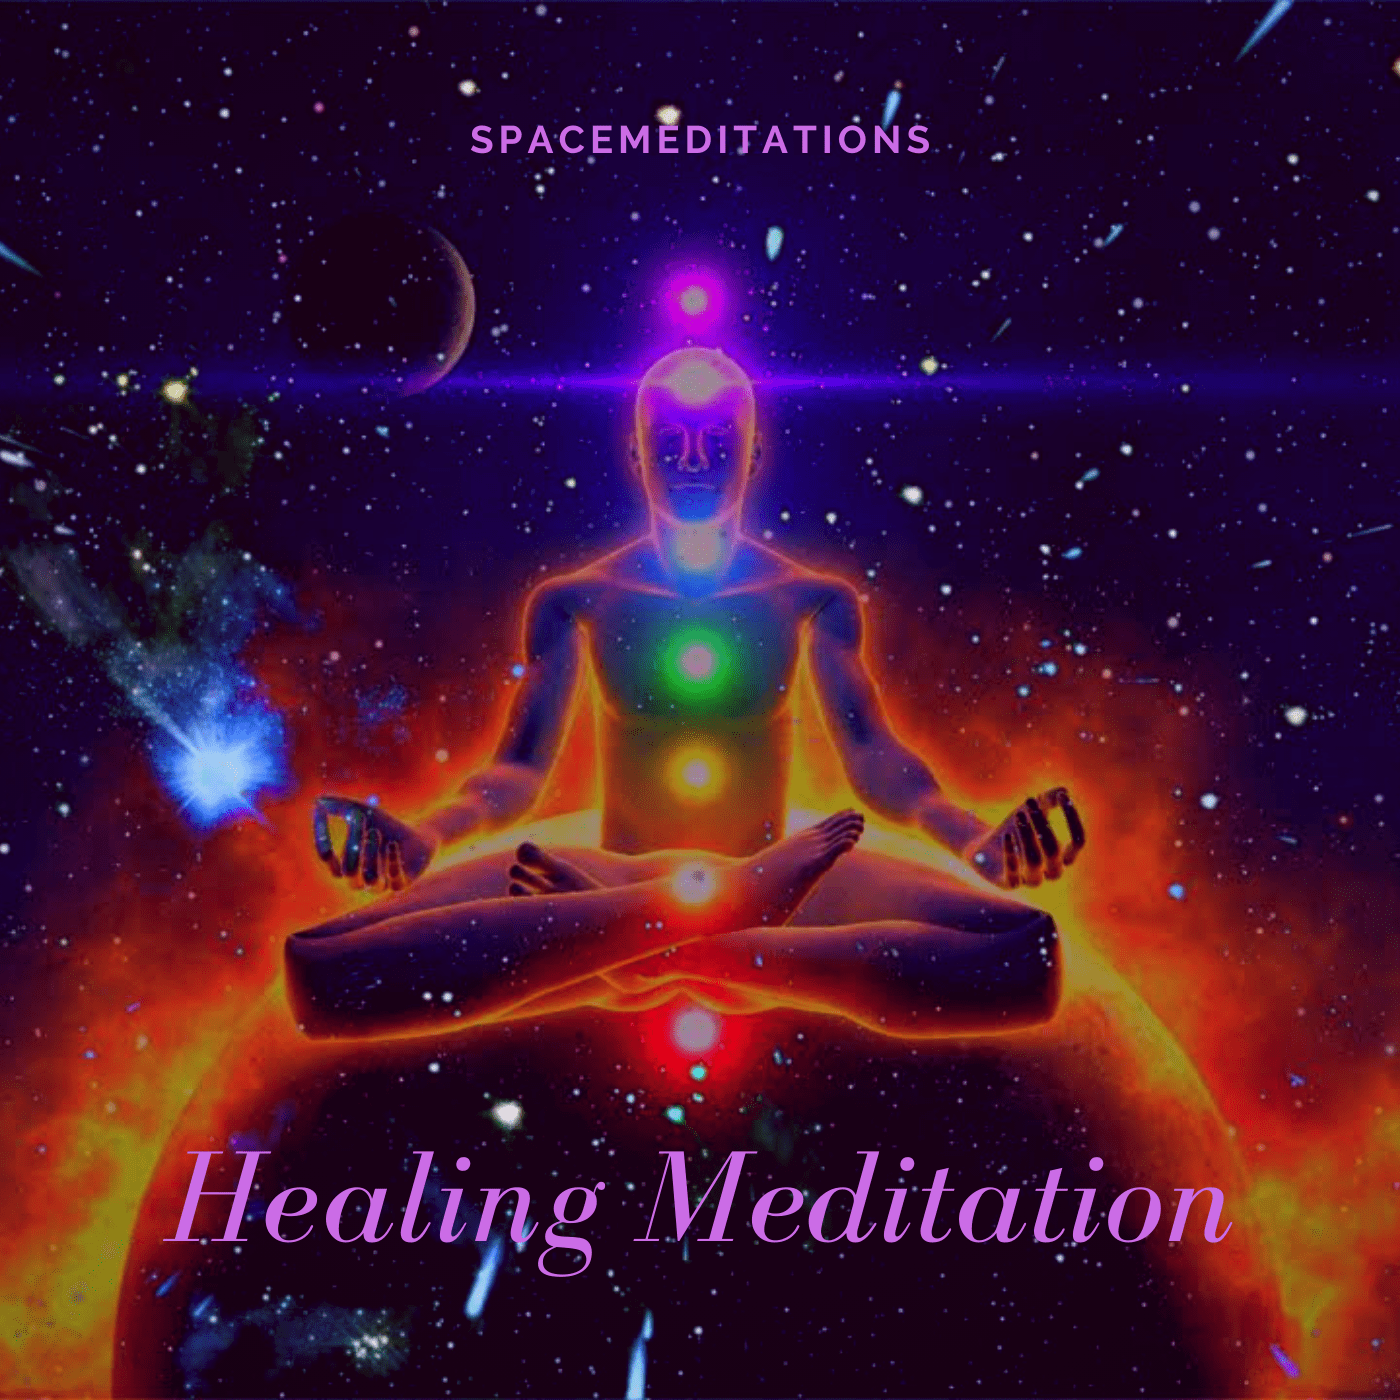 Healing meditation - Spacemeditations